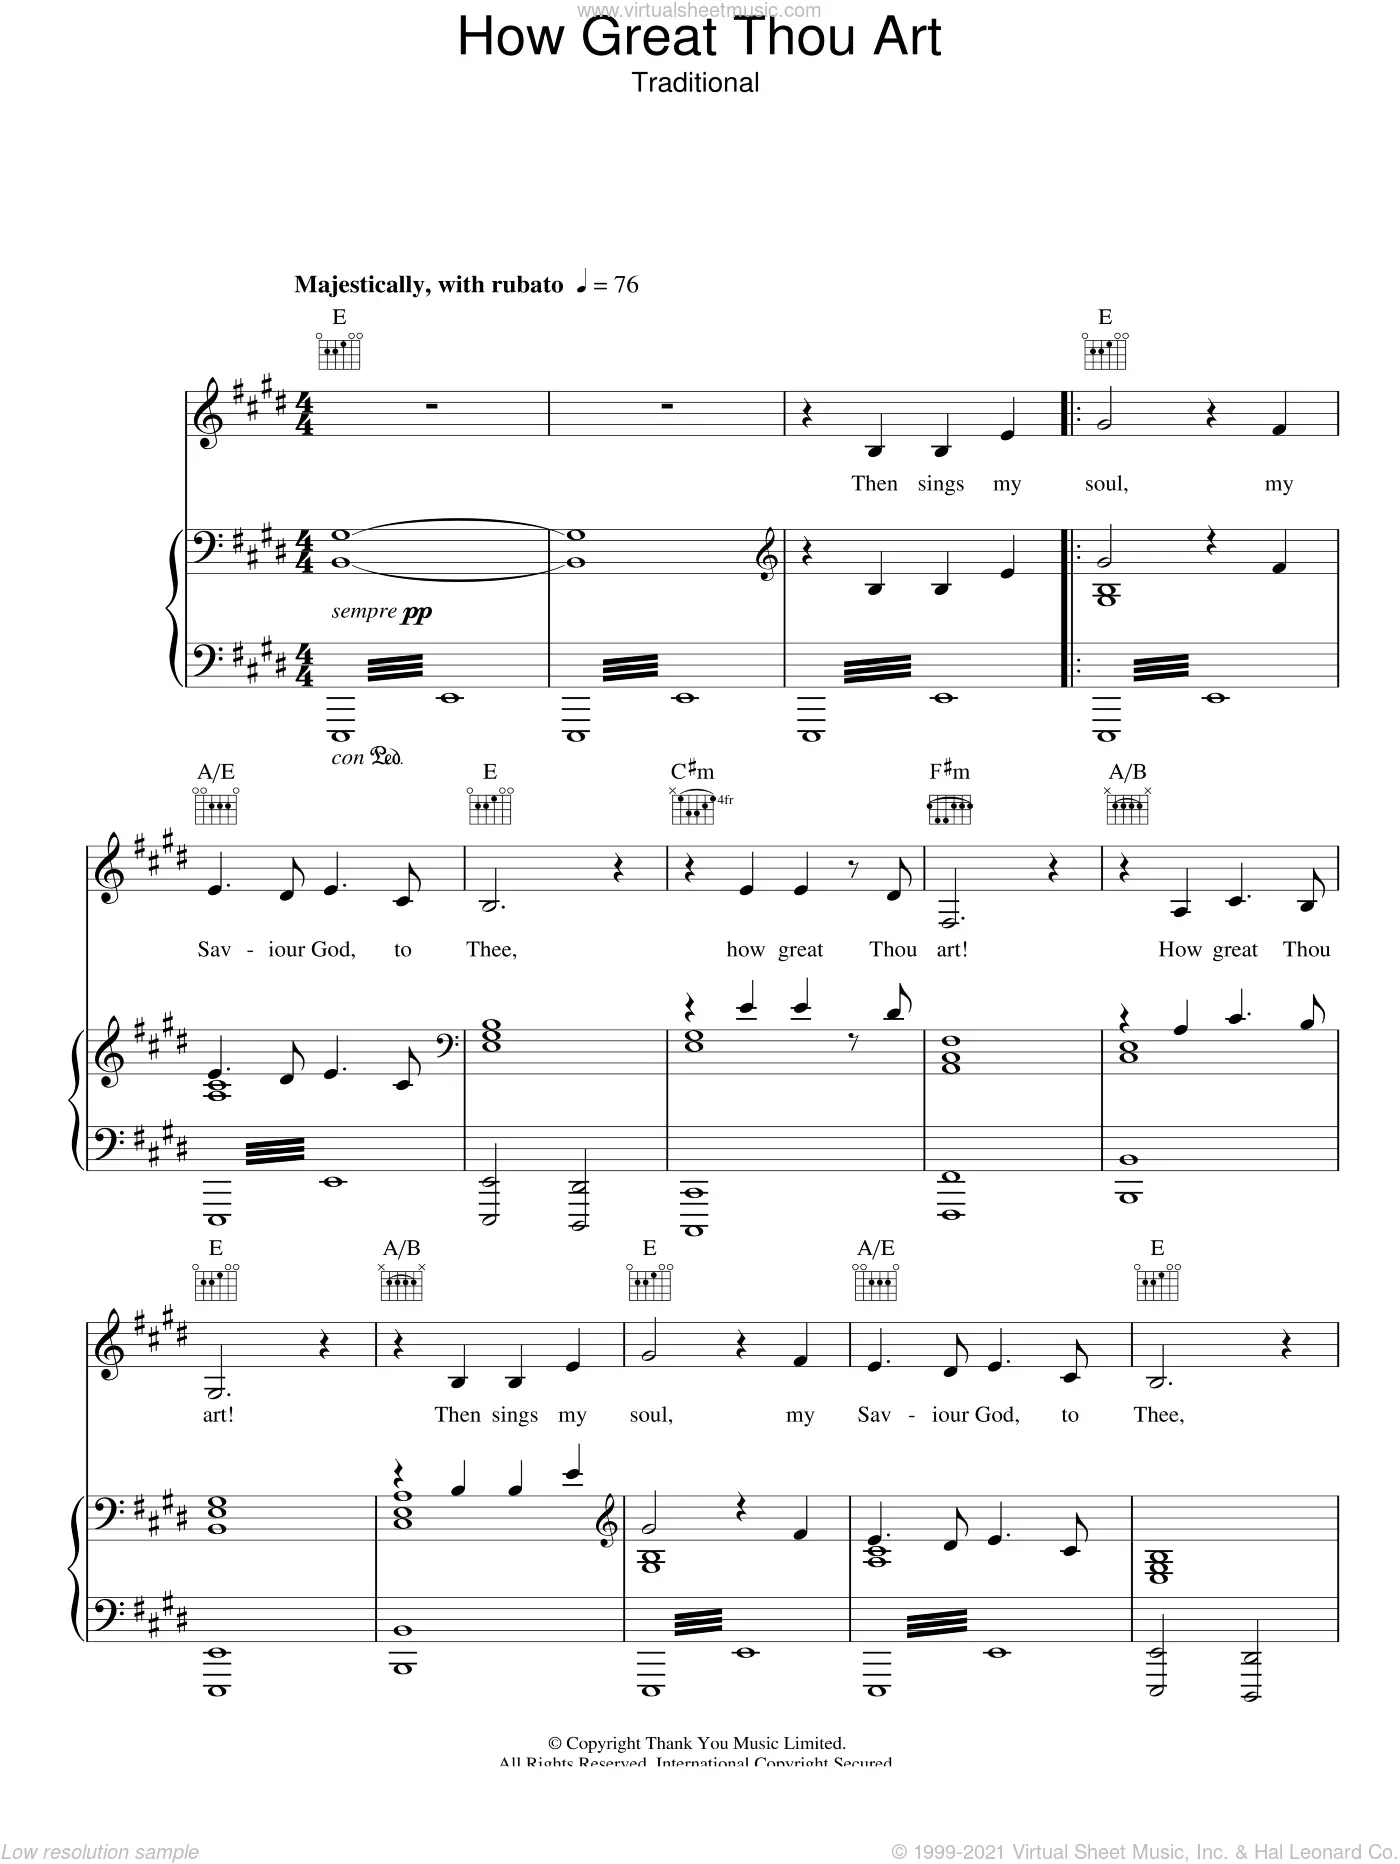 How Great Thou Art by Martina McBride - Guitar Tablature - Digital Sheet  Music